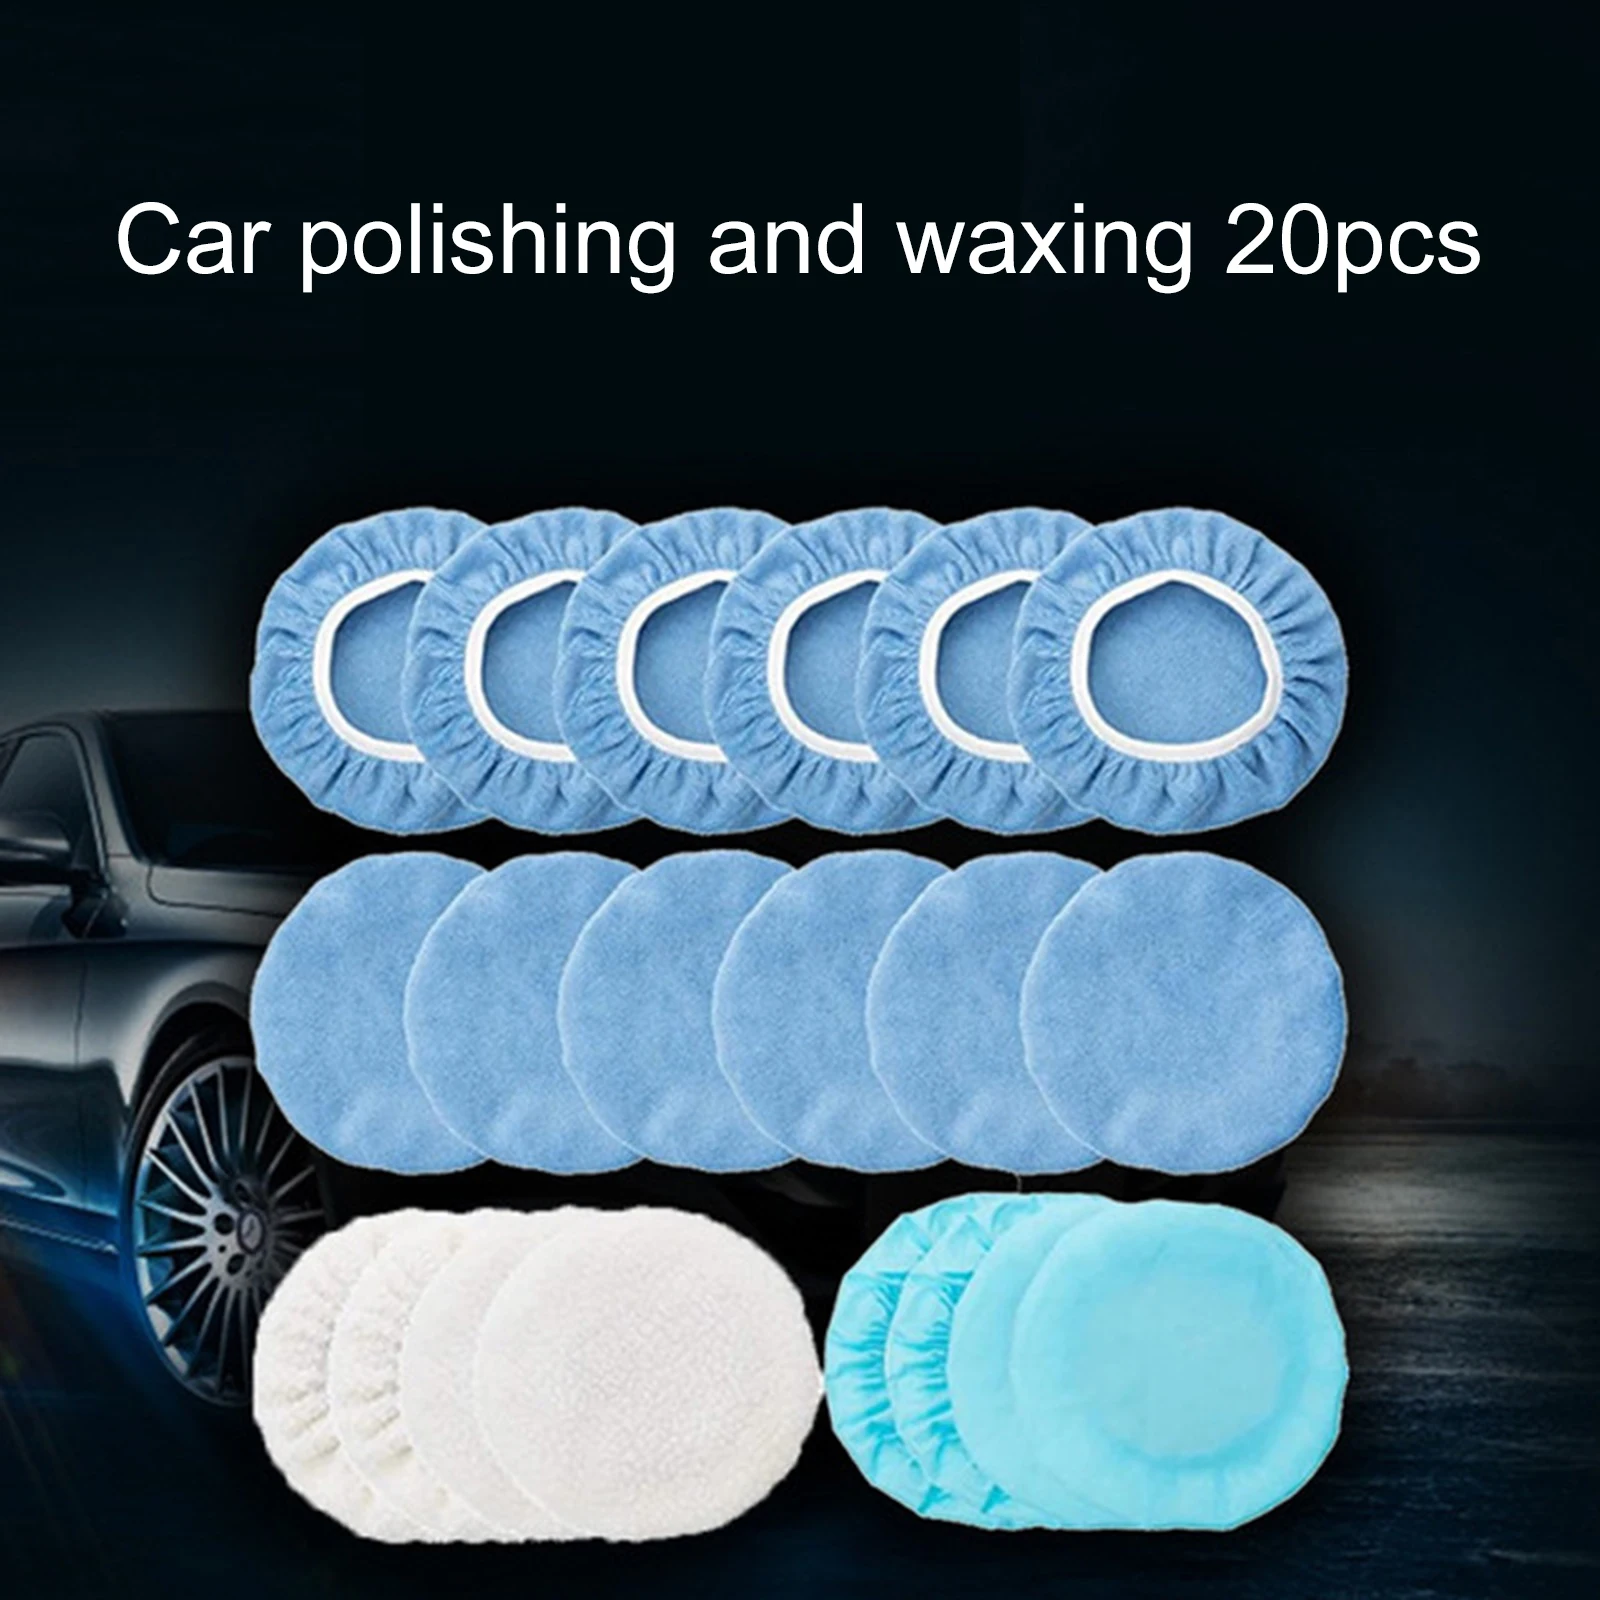 

20PCS5-6Inc Car Polisher Pad Applicator Pad Microfiber Polishing Bonnet and Waxing Pad With Finger Pocket Cotton Wool Microfiber